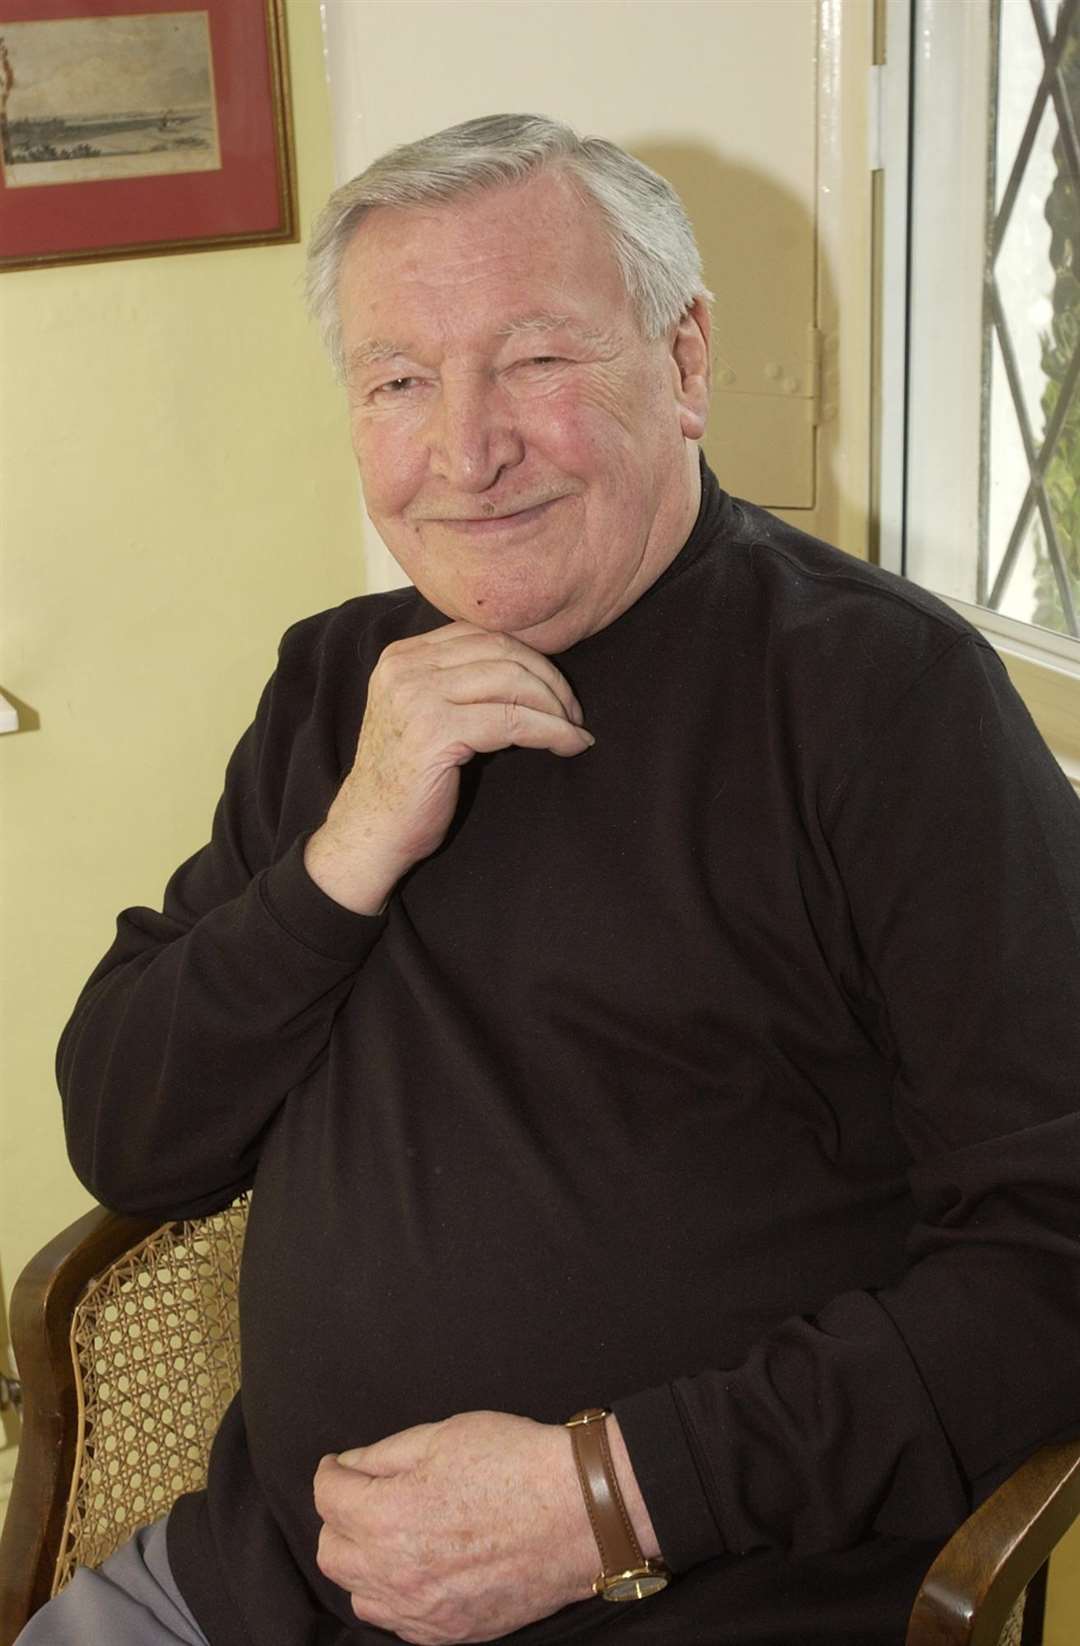 Bernard Cook pictured in 2005